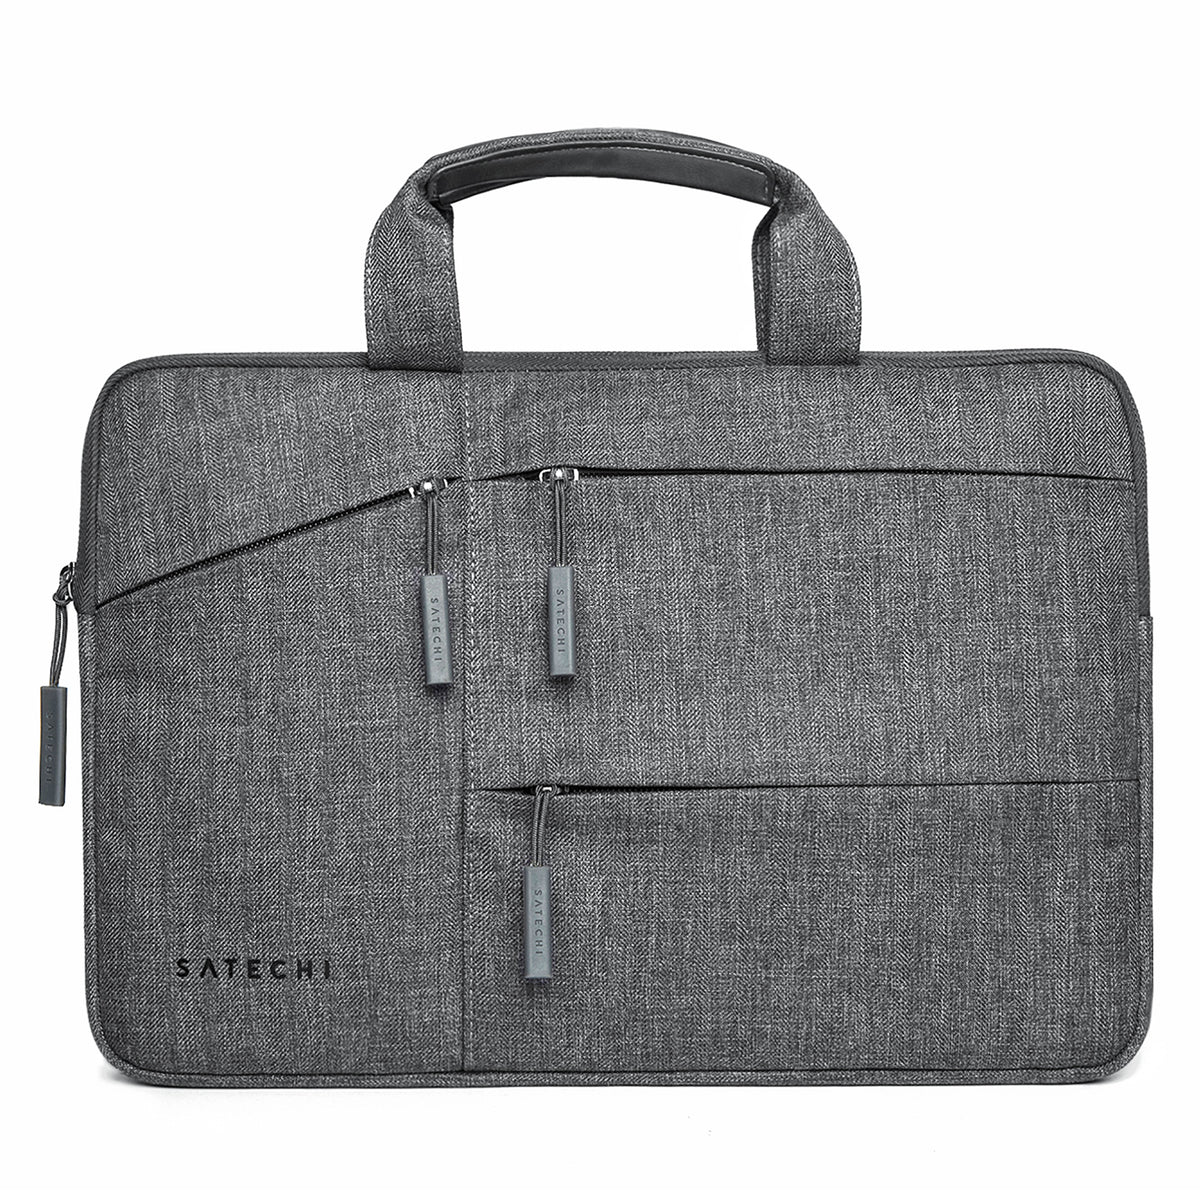 SATECHI Fabric Laptop Carrying Bag 13-inch - Gray